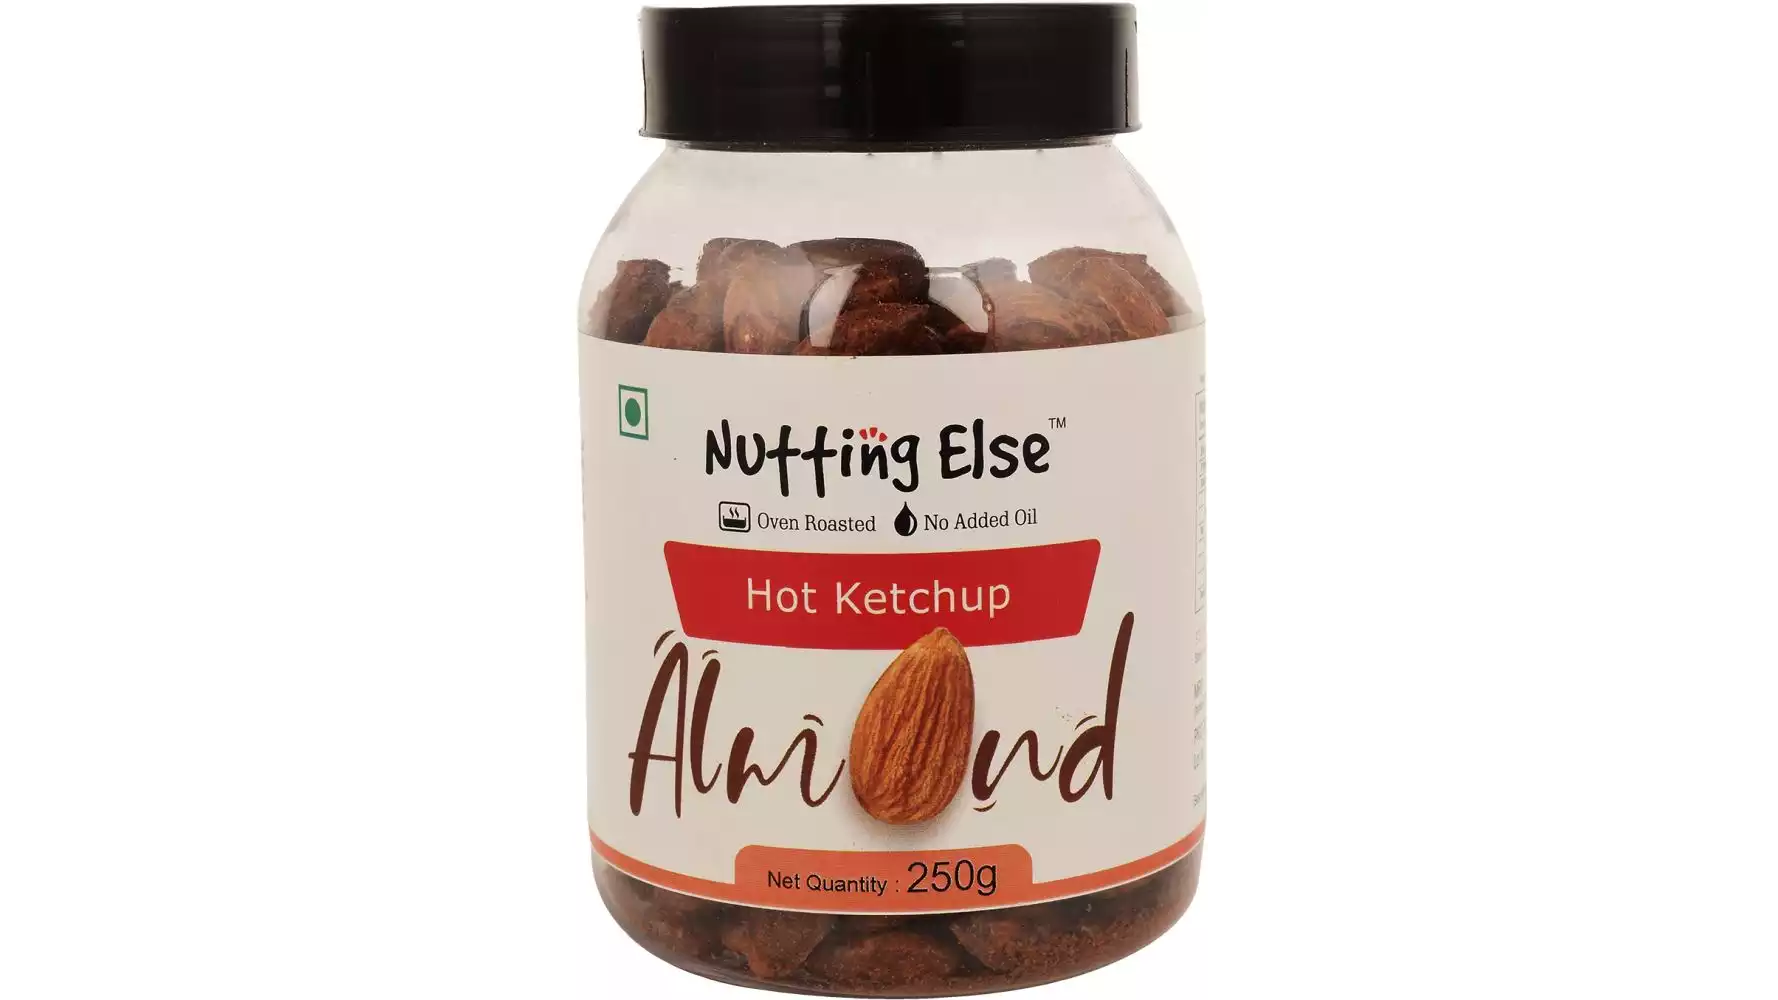 Nutting Else Hot Ketchup Almond (250g)